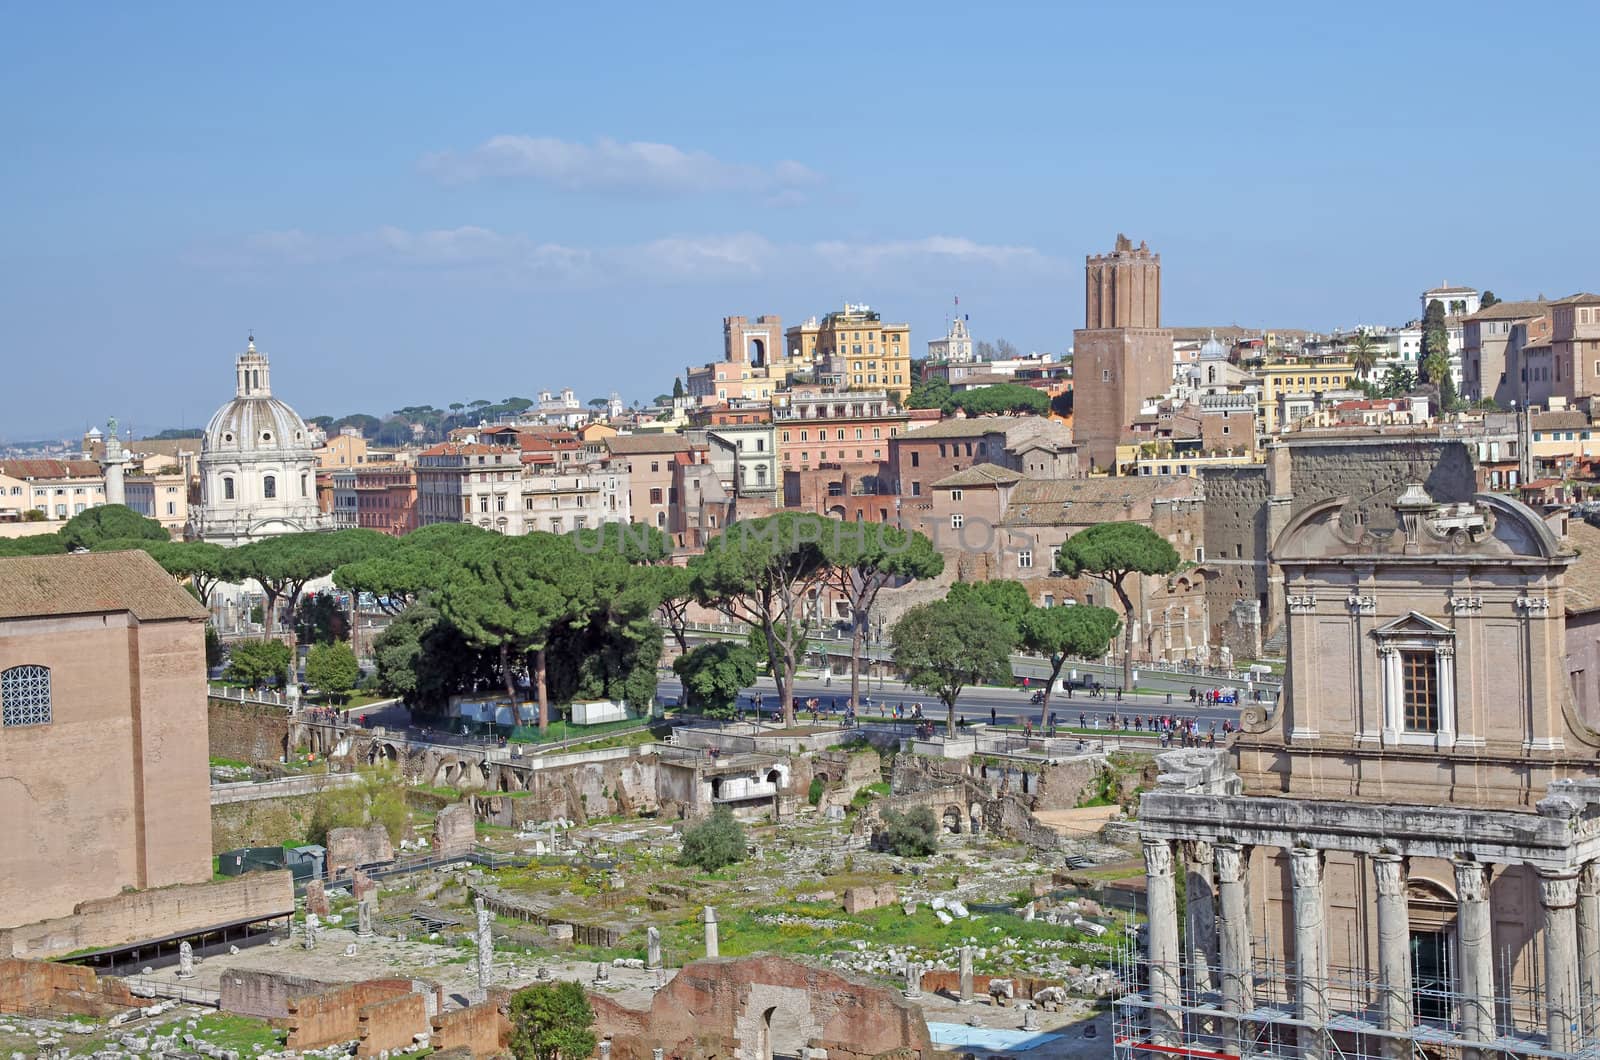 Ancient part of Rome (Roman Forum), Italy